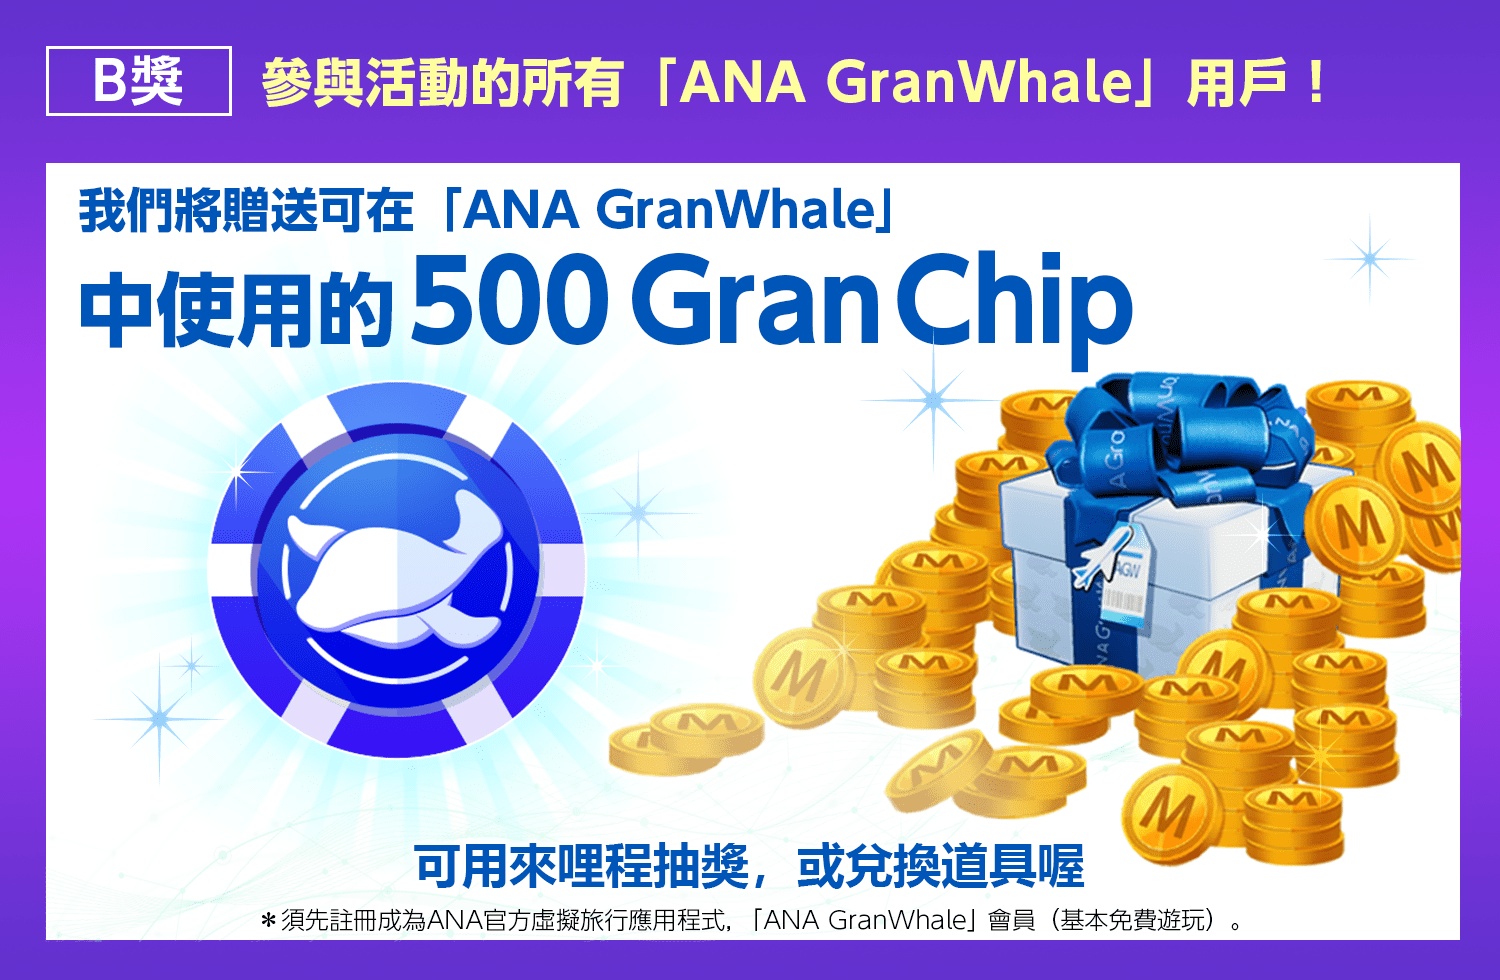 B獎：參與活動的所有「ANA GranWhale」用戶！我們將贈送可在「ANA GranWhale」中使用的500 Gran Chip 可用來哩程抽獎，或兌換道具喔